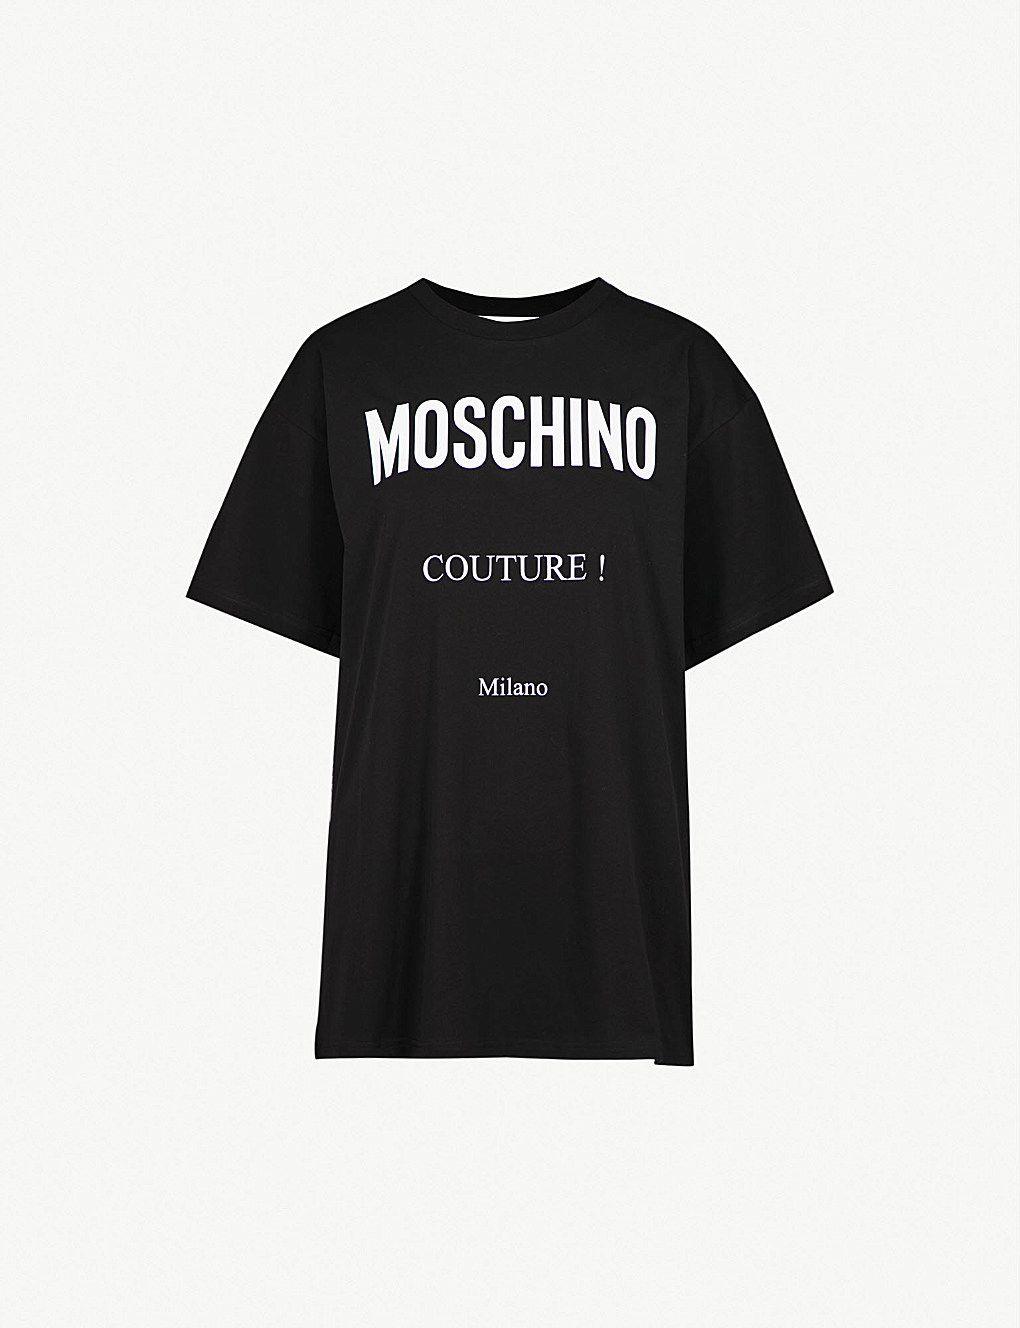 Moschino Couture Logo - MOSCHINO Print Cotton Jersey T Shirt